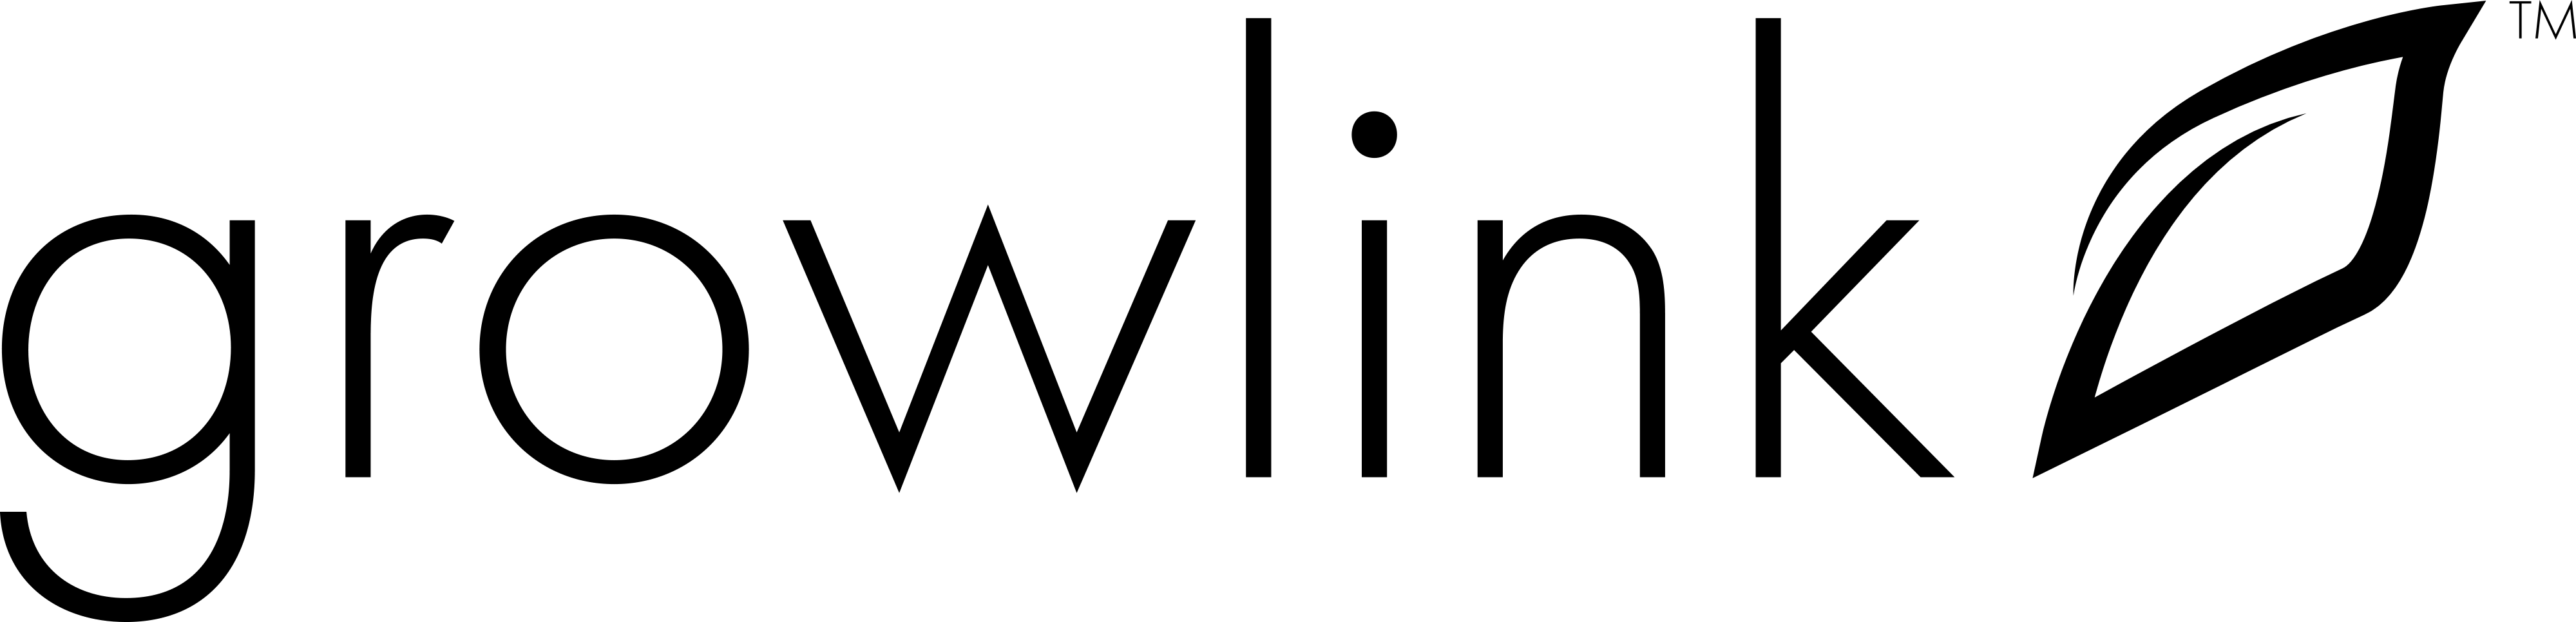 growlink logo